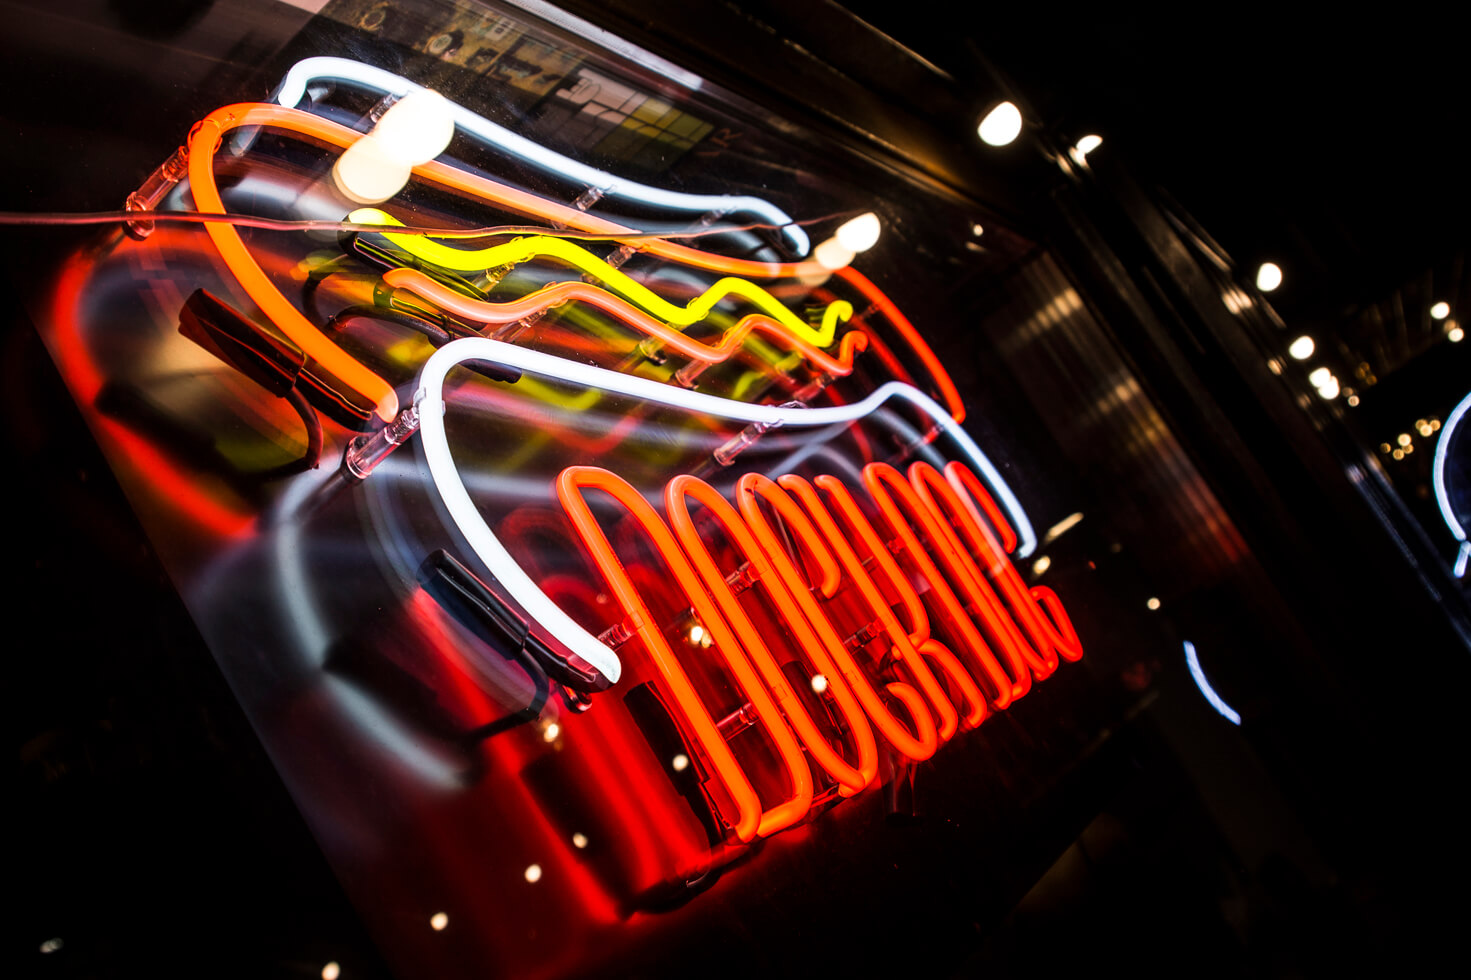 Perro de muelle - neon-dock-dog-hotdog-sandwich-fast food-neon-colored-behind-the-glass-neon-on-plexi-neon-in-restaurant-neon-on-glass-neon-interior-gdansk-electrickow-pub